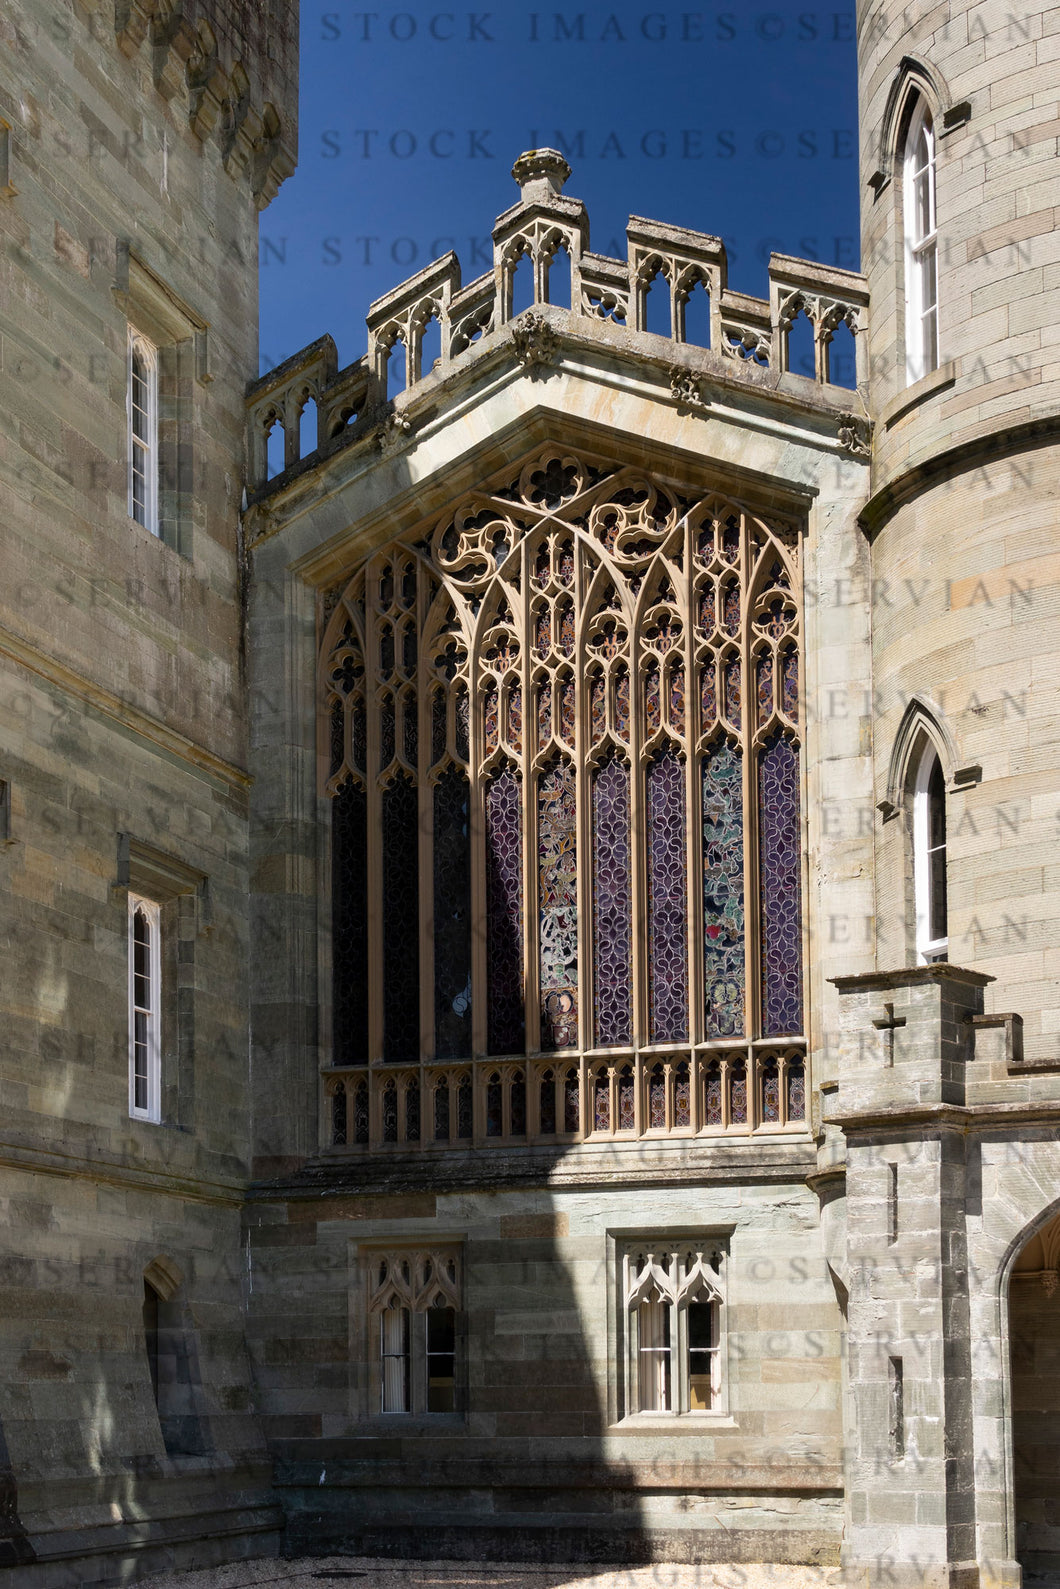 Historical building - Chapel exterior, Scotland (Nick 1809)